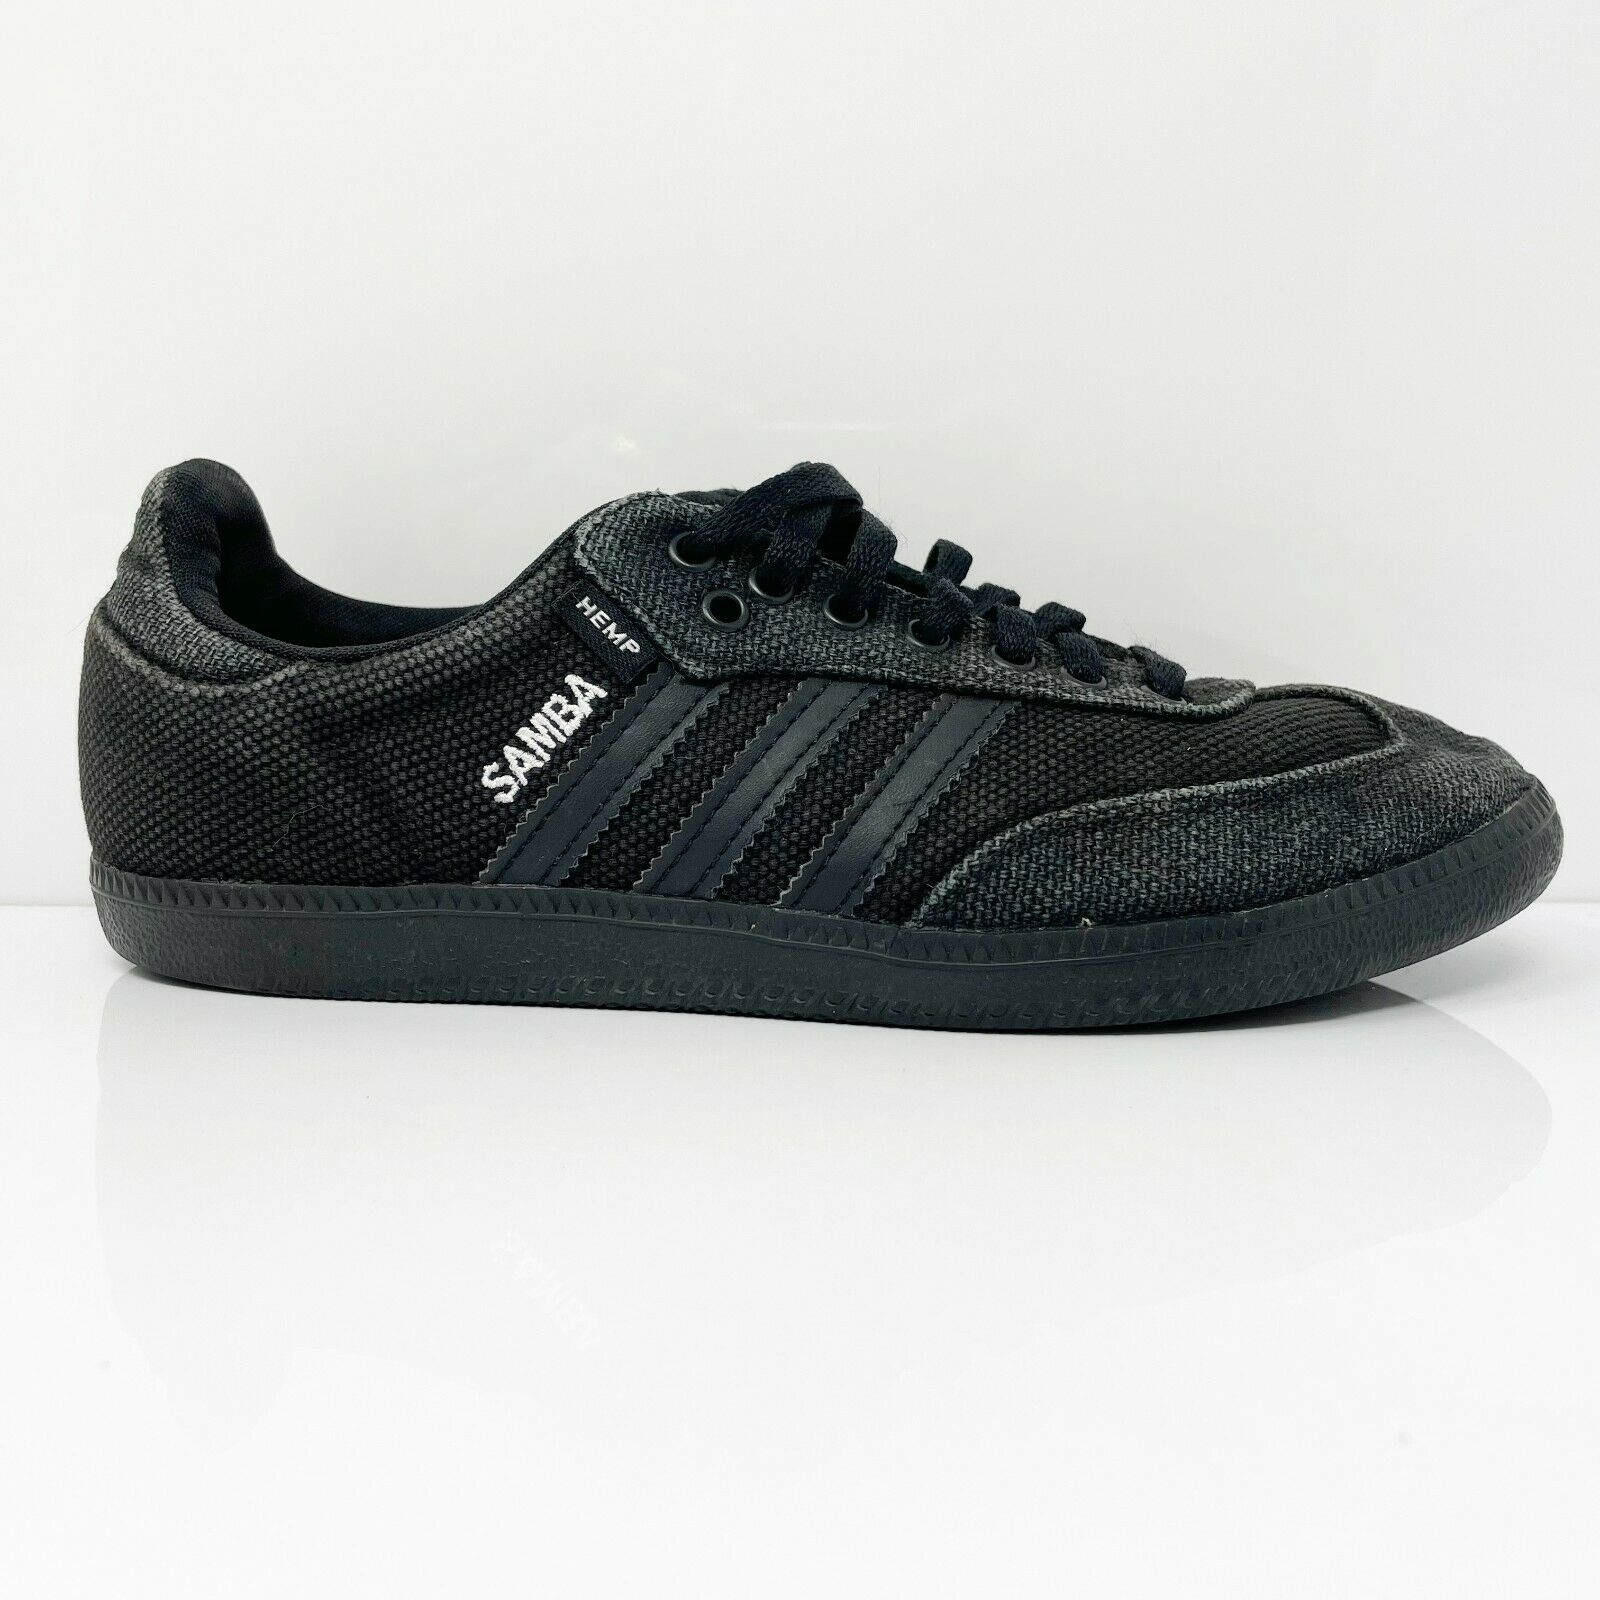 Adidas Mens Samba G66768 Black Running Shoes Sneakers Size 7.5